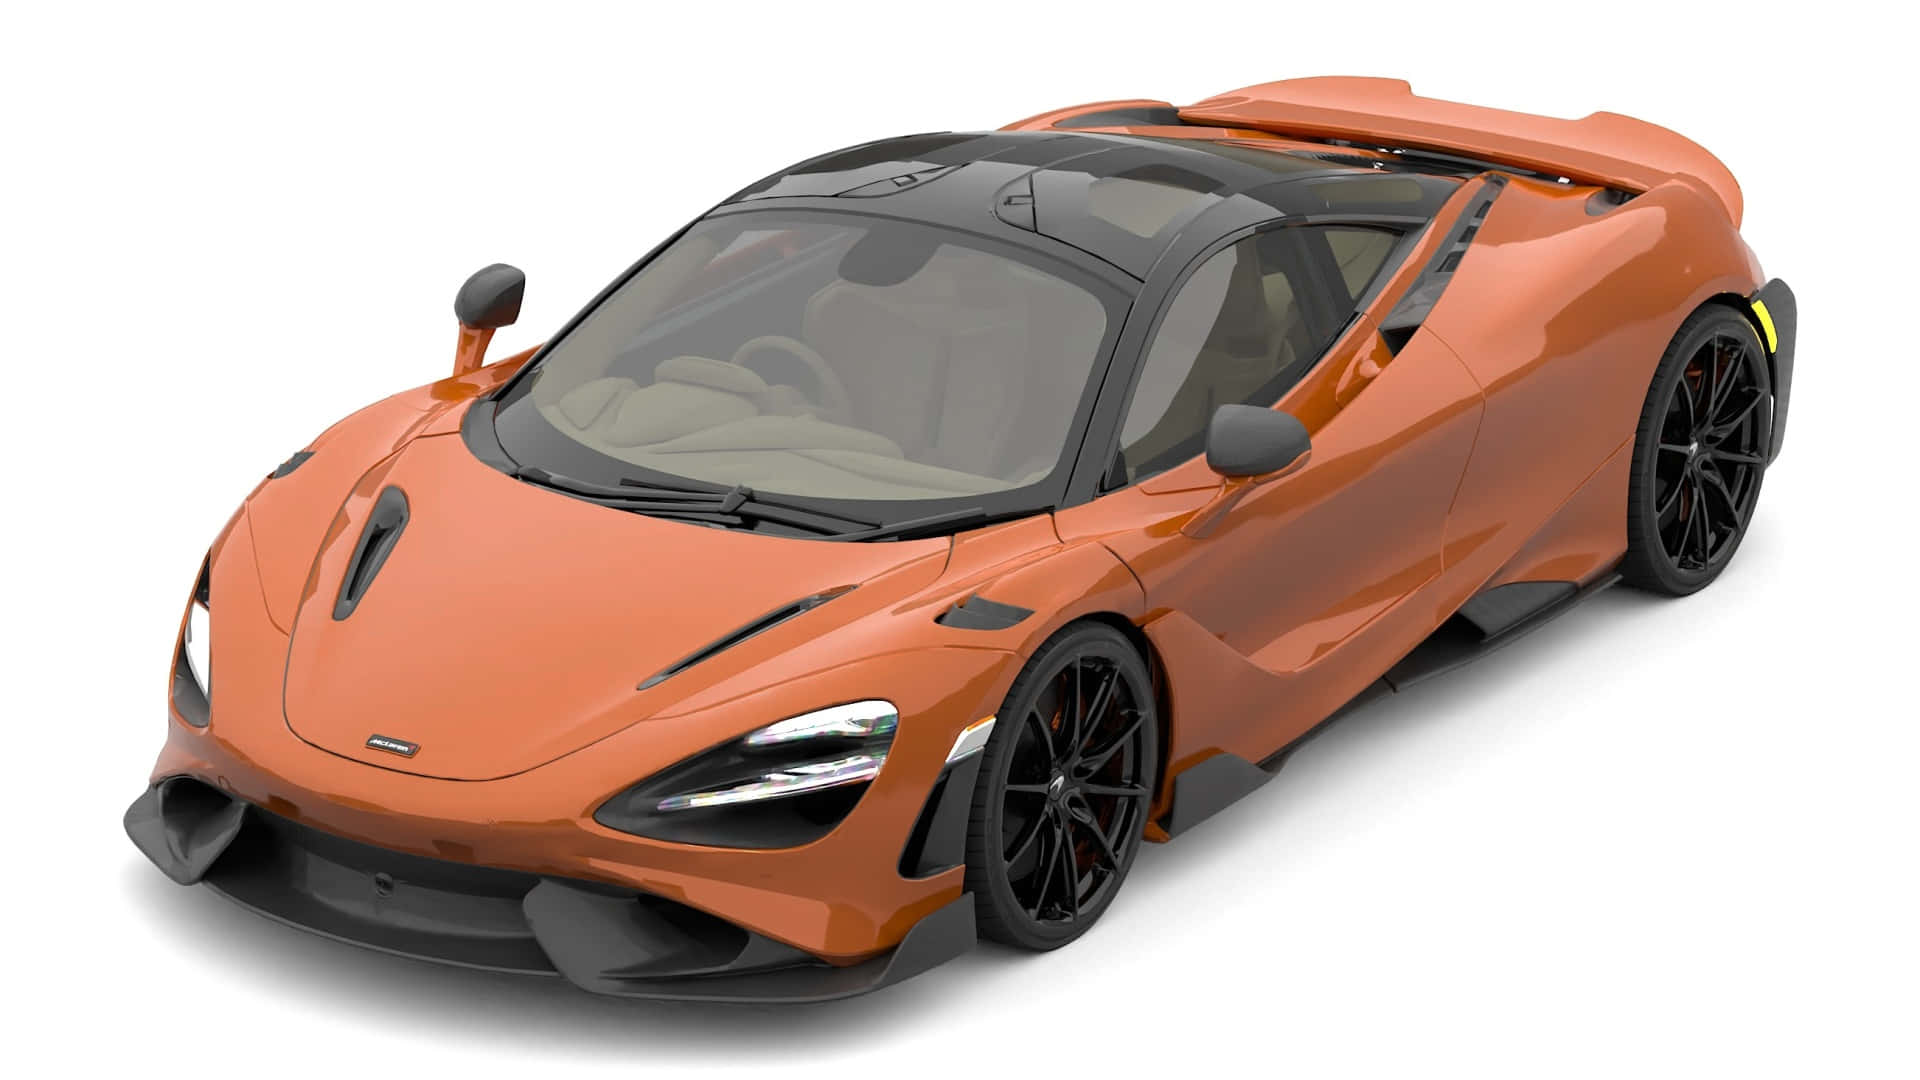 Stunning McLaren 765LT in Dynamic Action Wallpaper